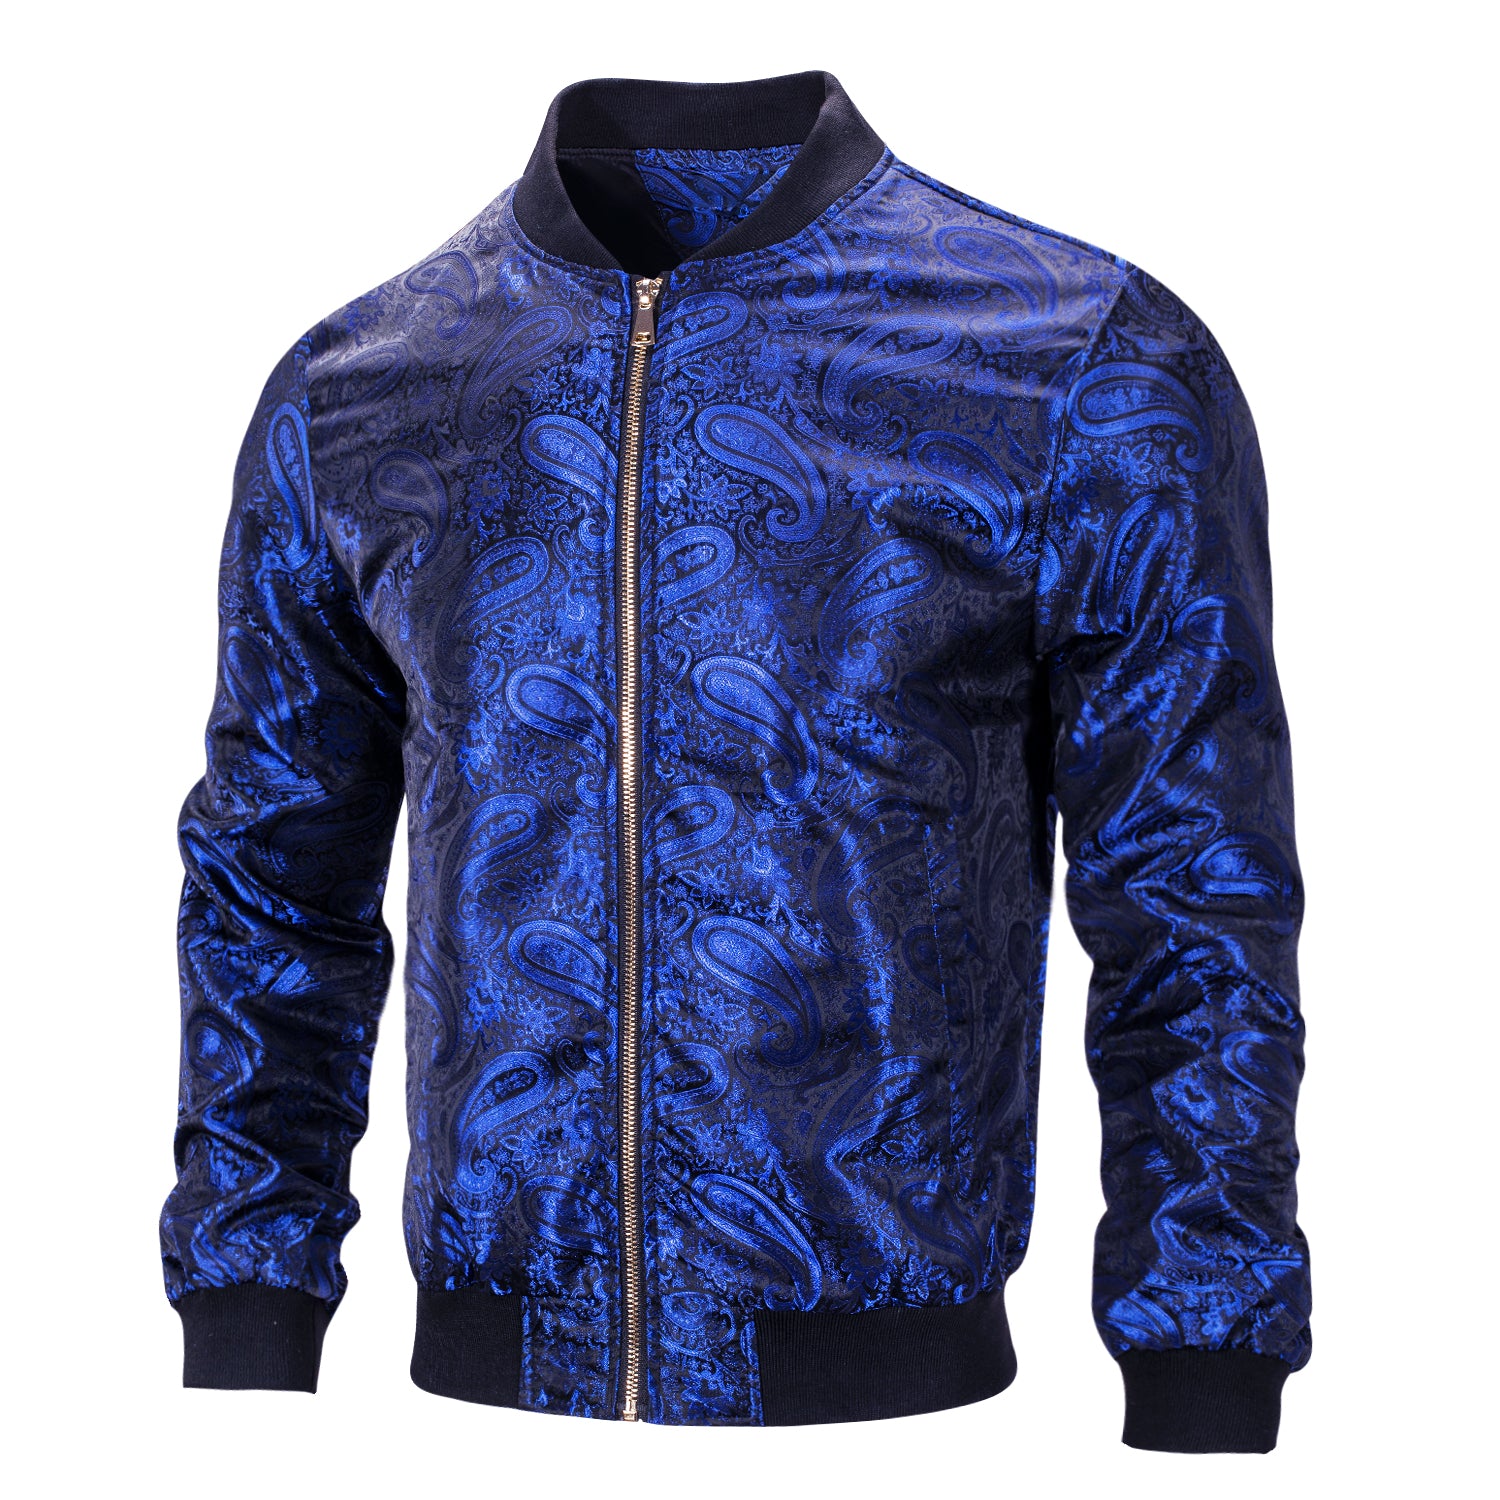 Royal Blue Paisley Men's Urban Lightweight Zip Jacket Casual